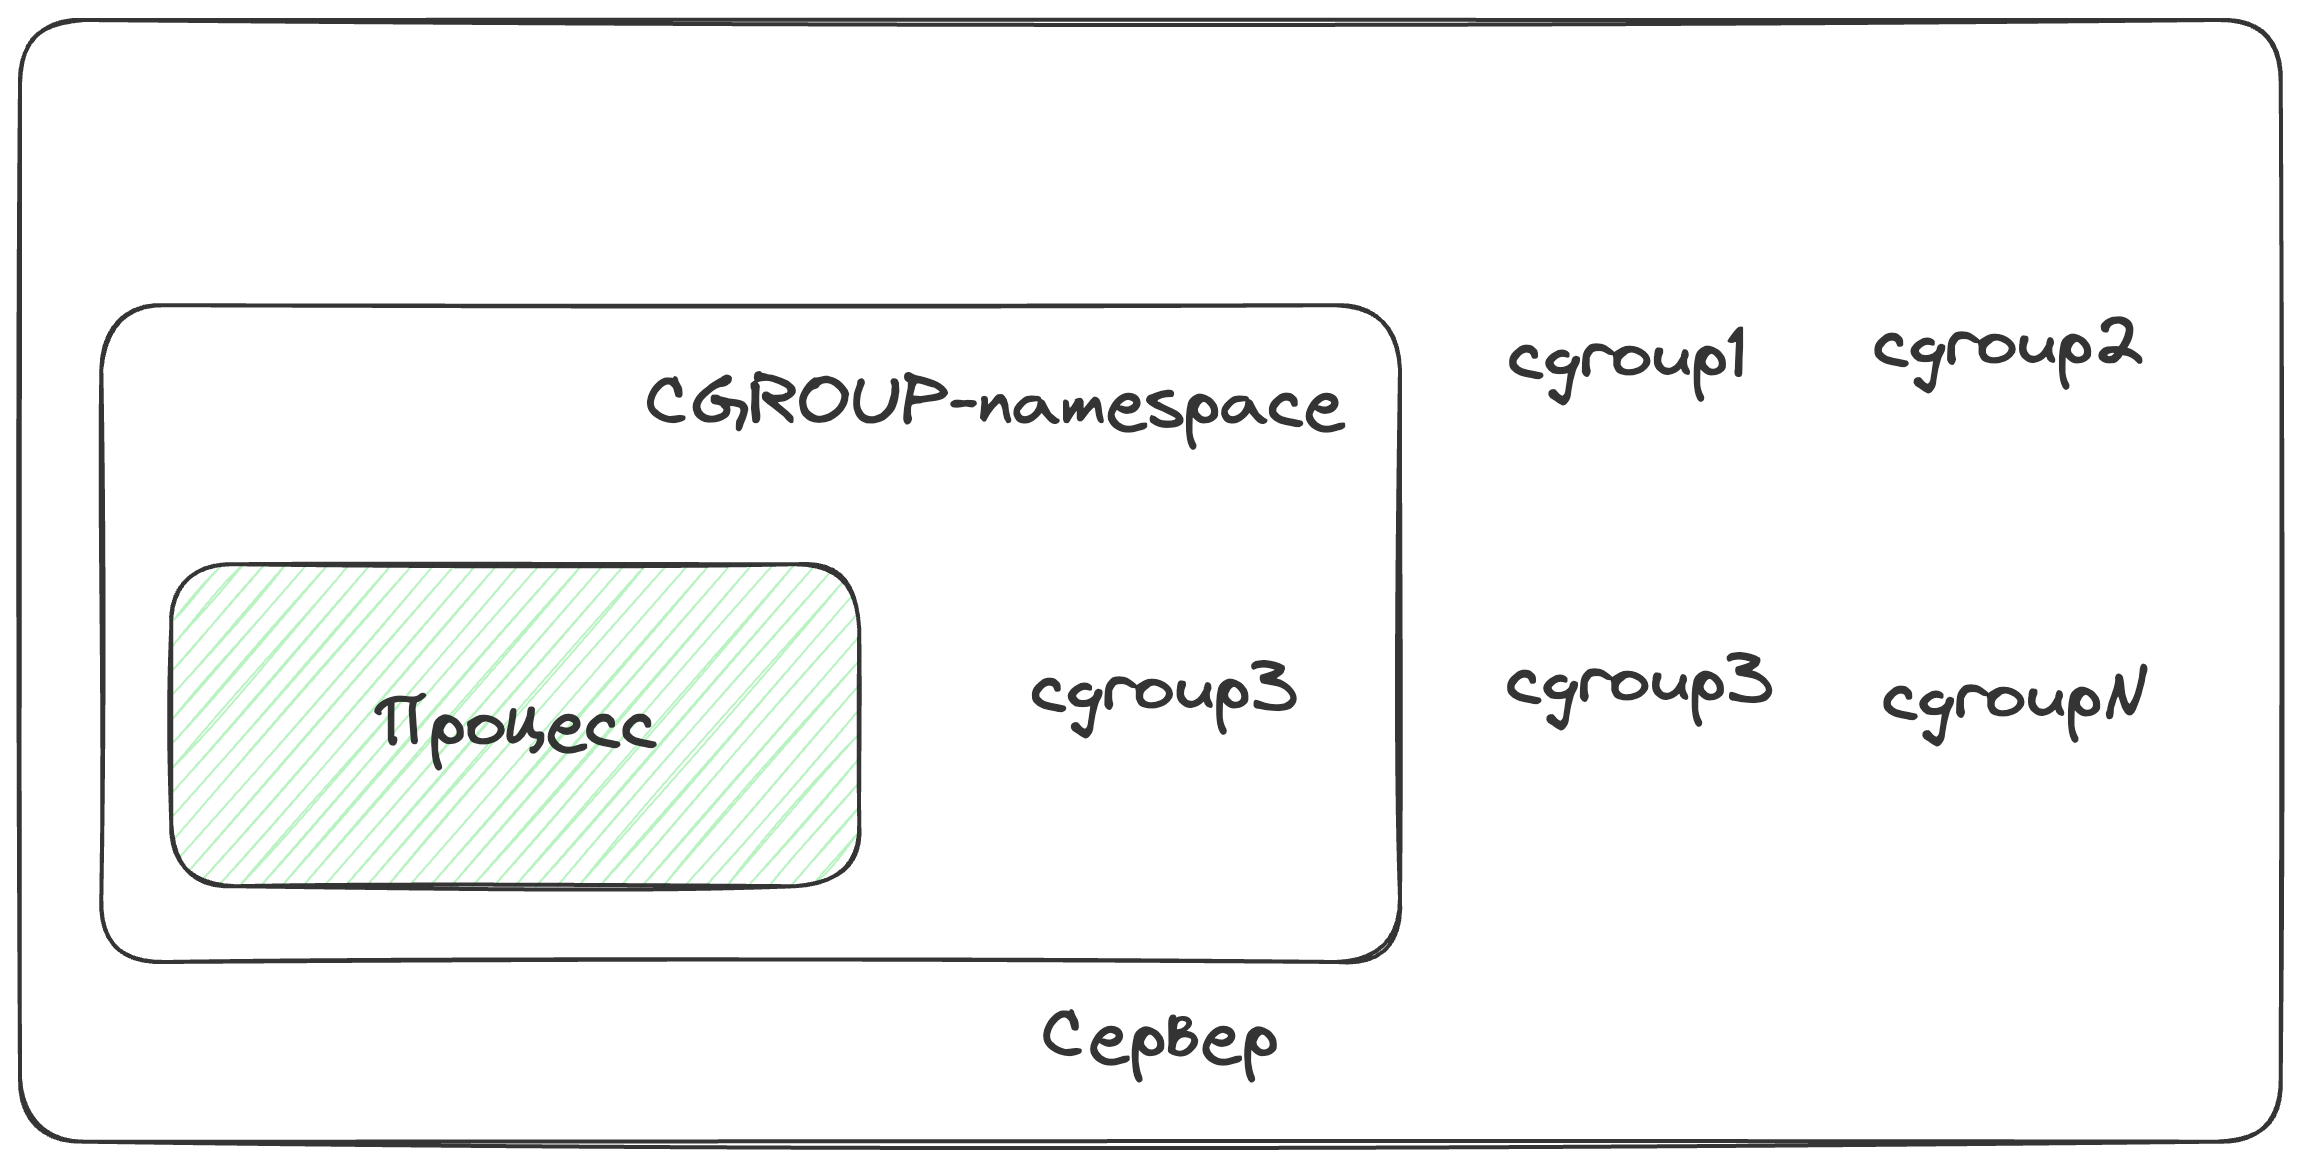 namespace-cgroup